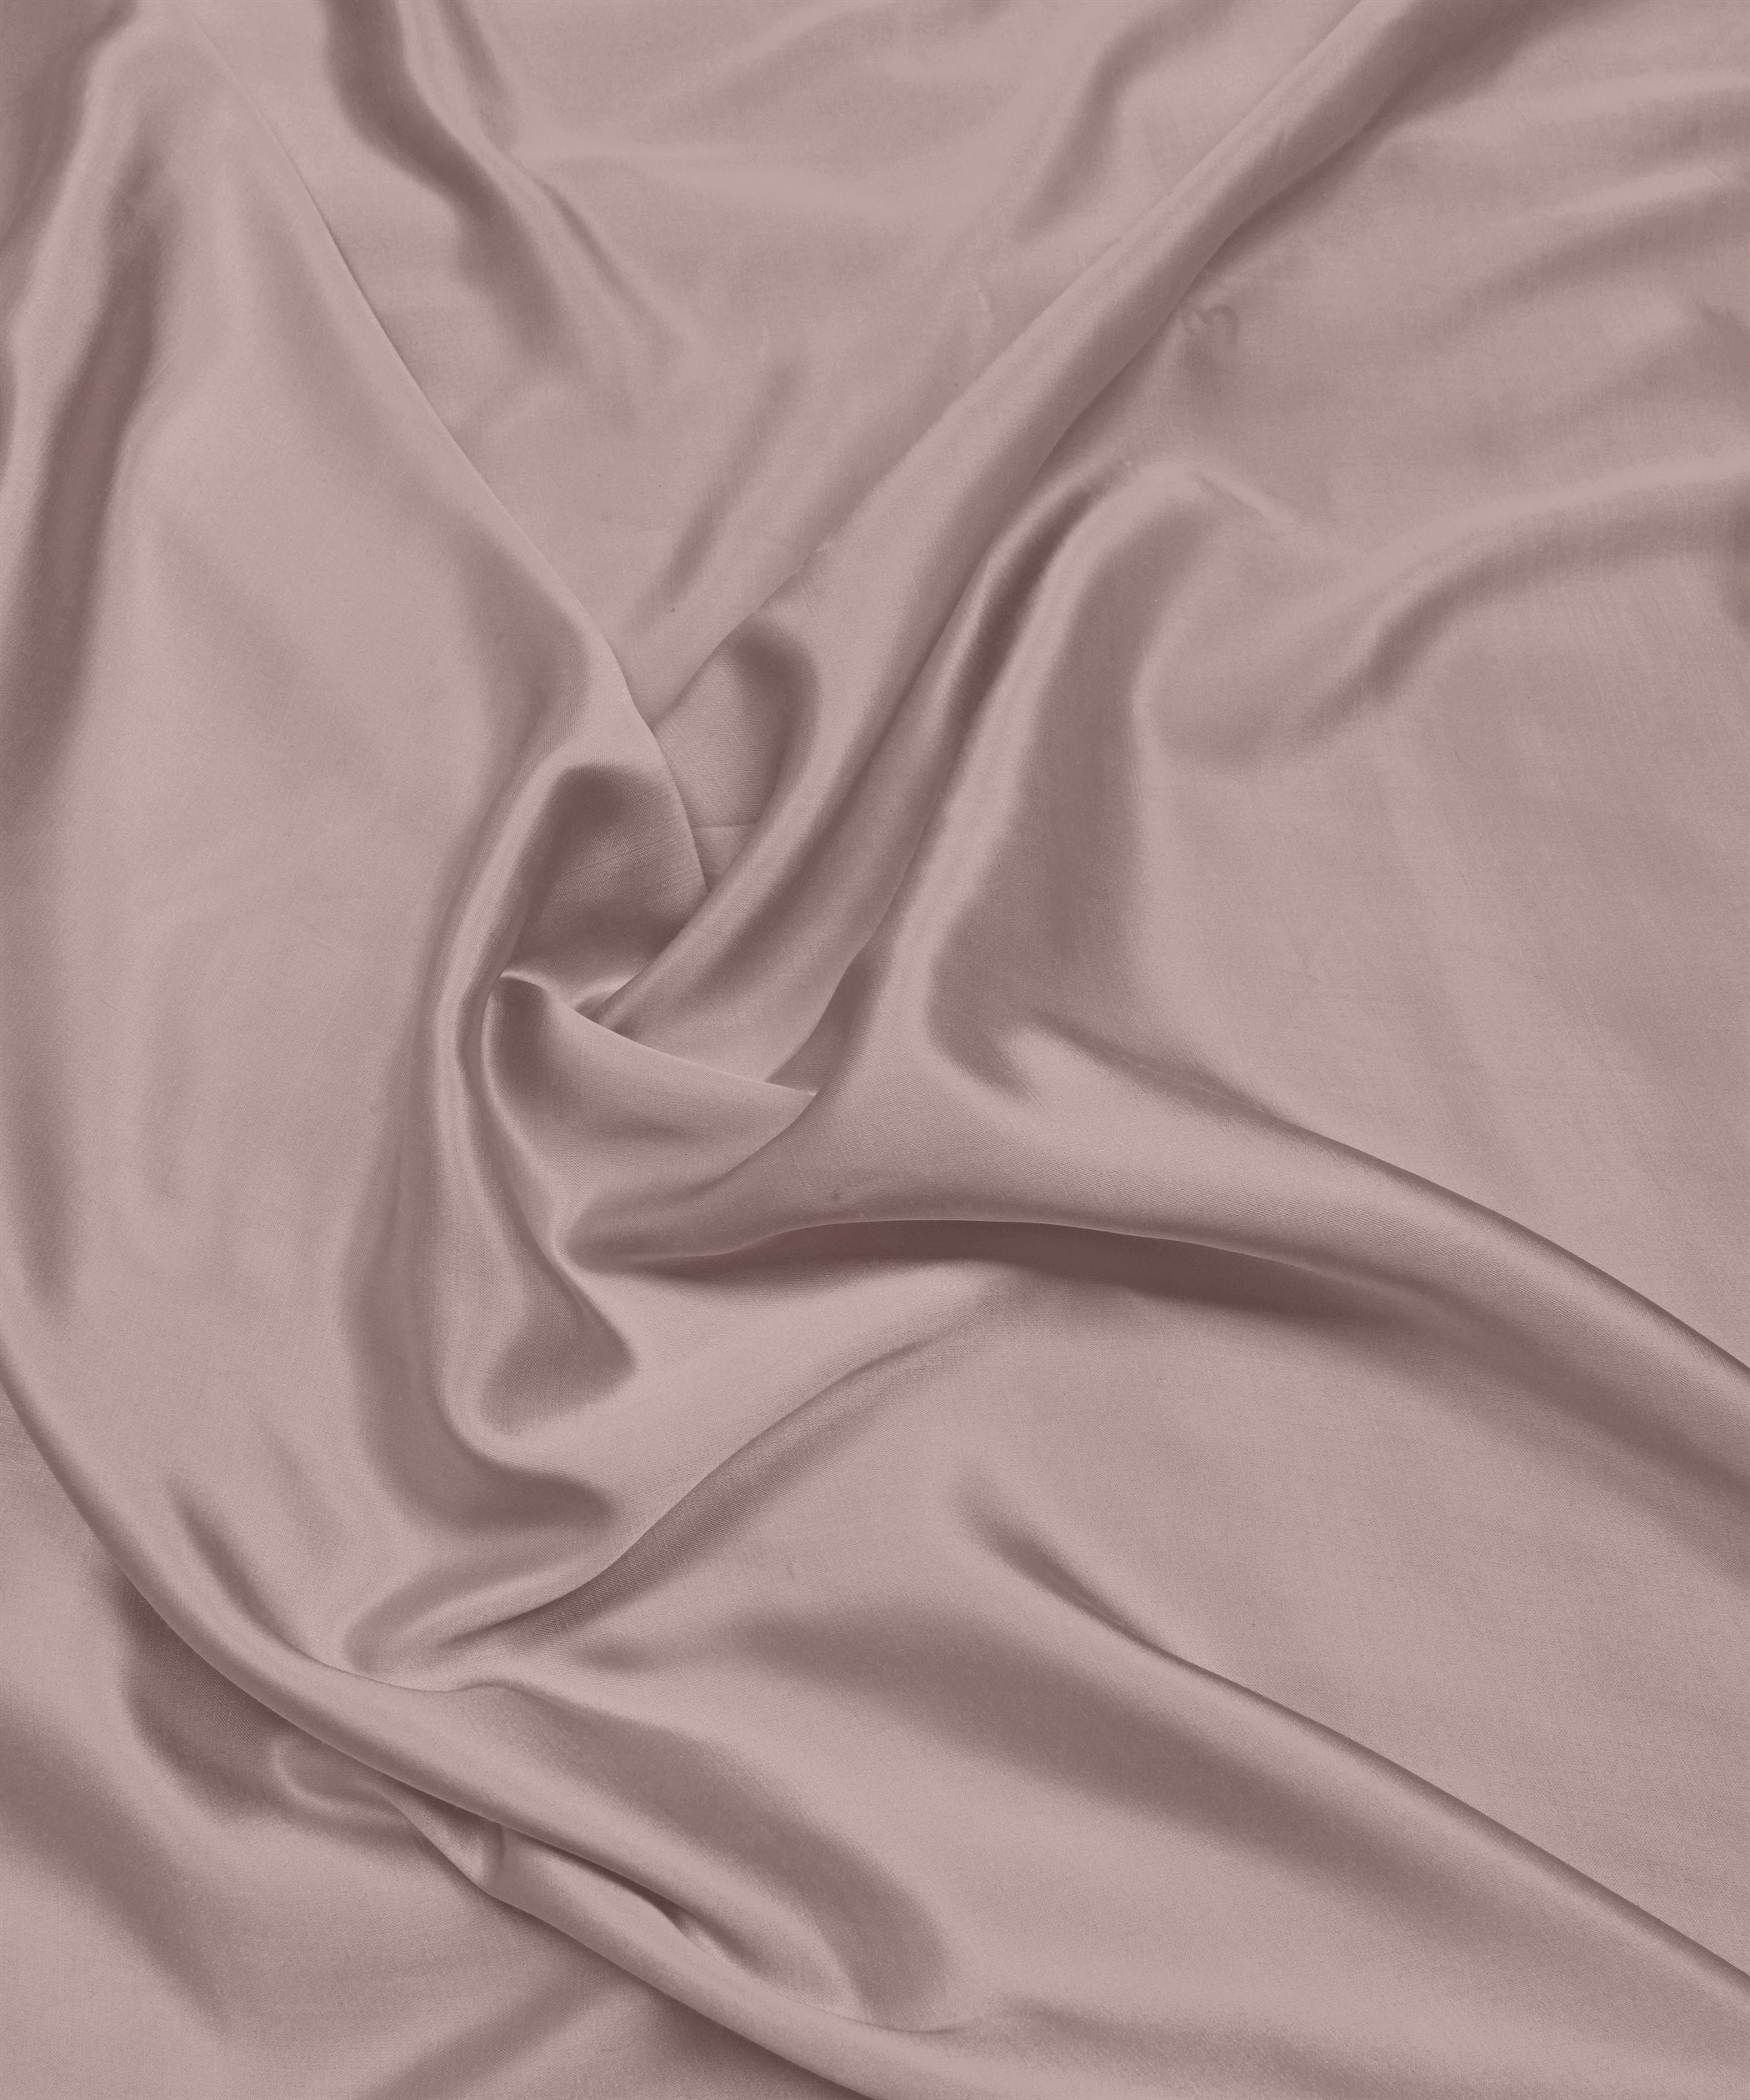 Lark Plain Dyed Modal Satin Fabric